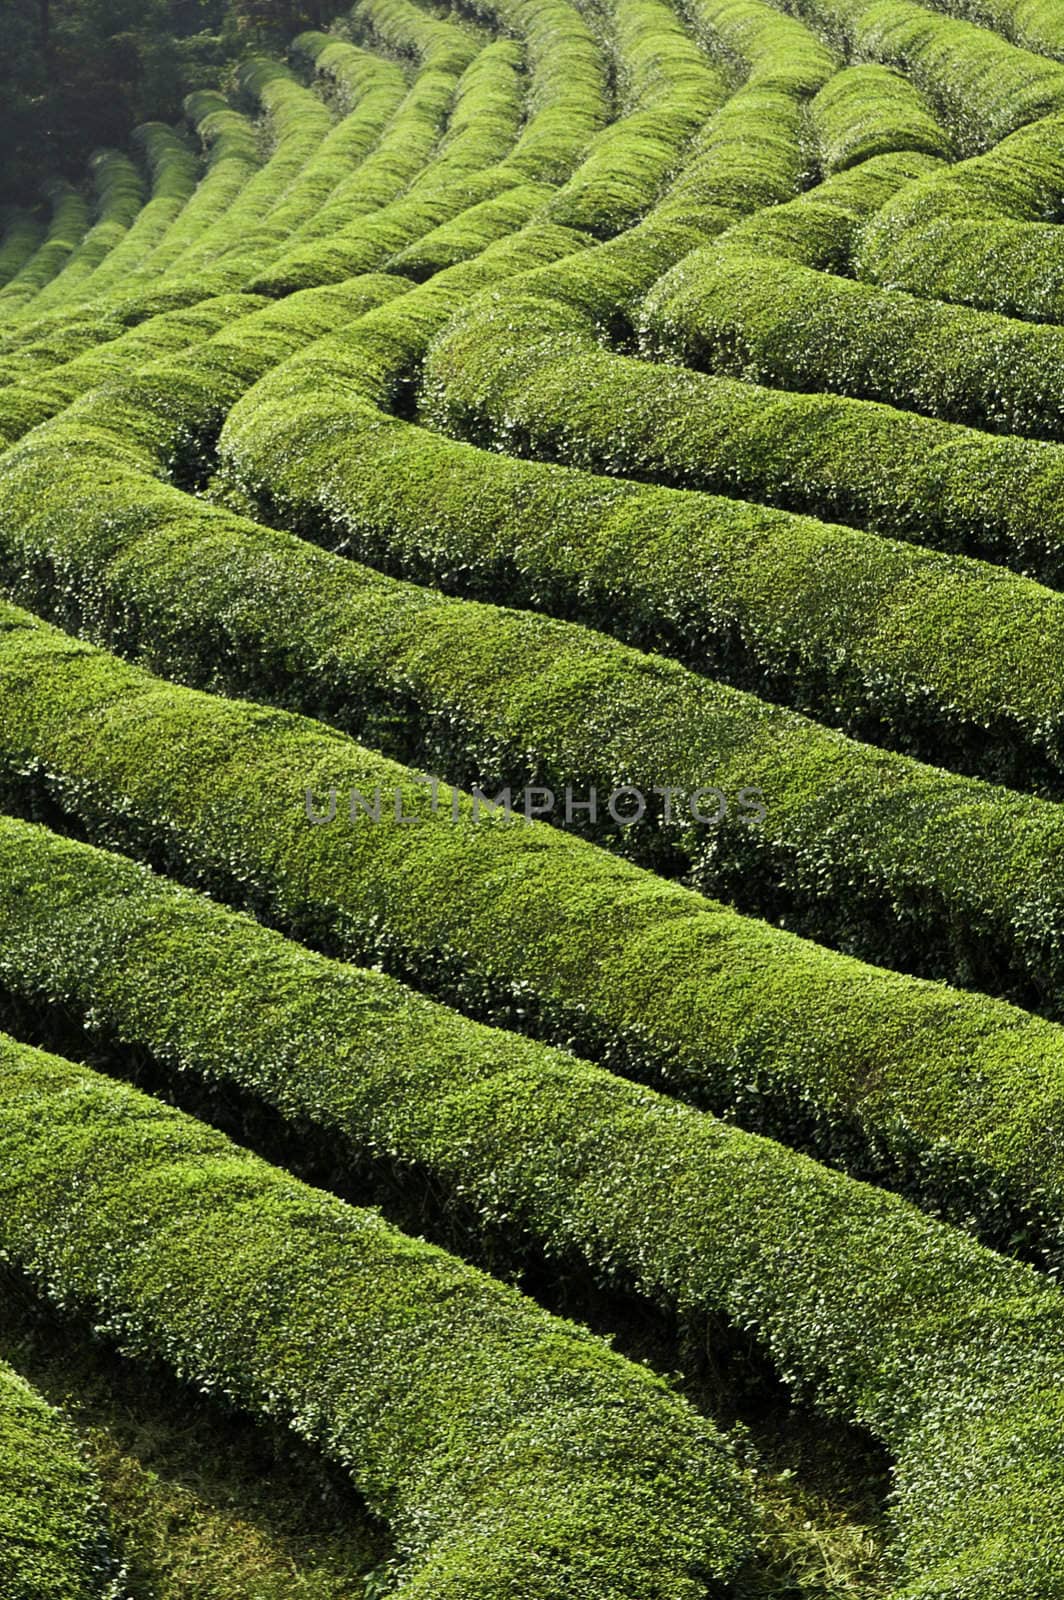 Rows of Green tea in a Field in Asia